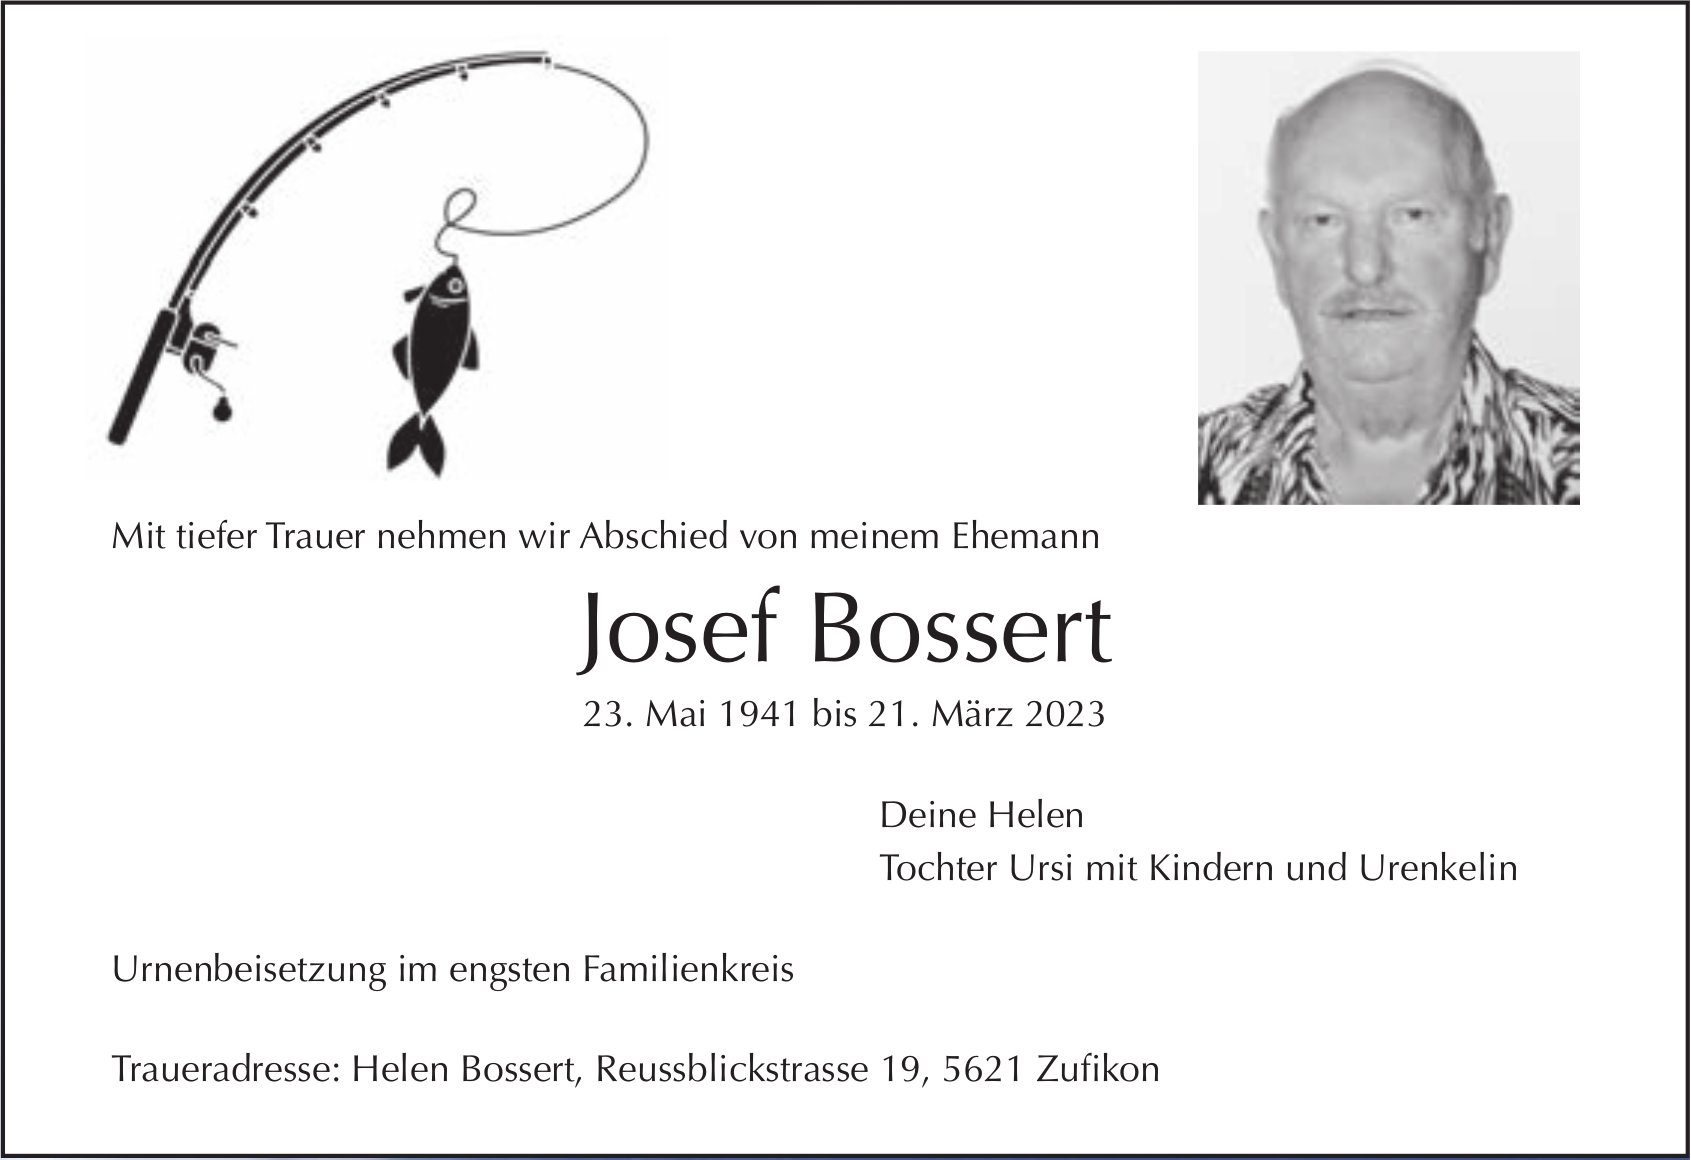 Josef Bossert, März 2023 / TA